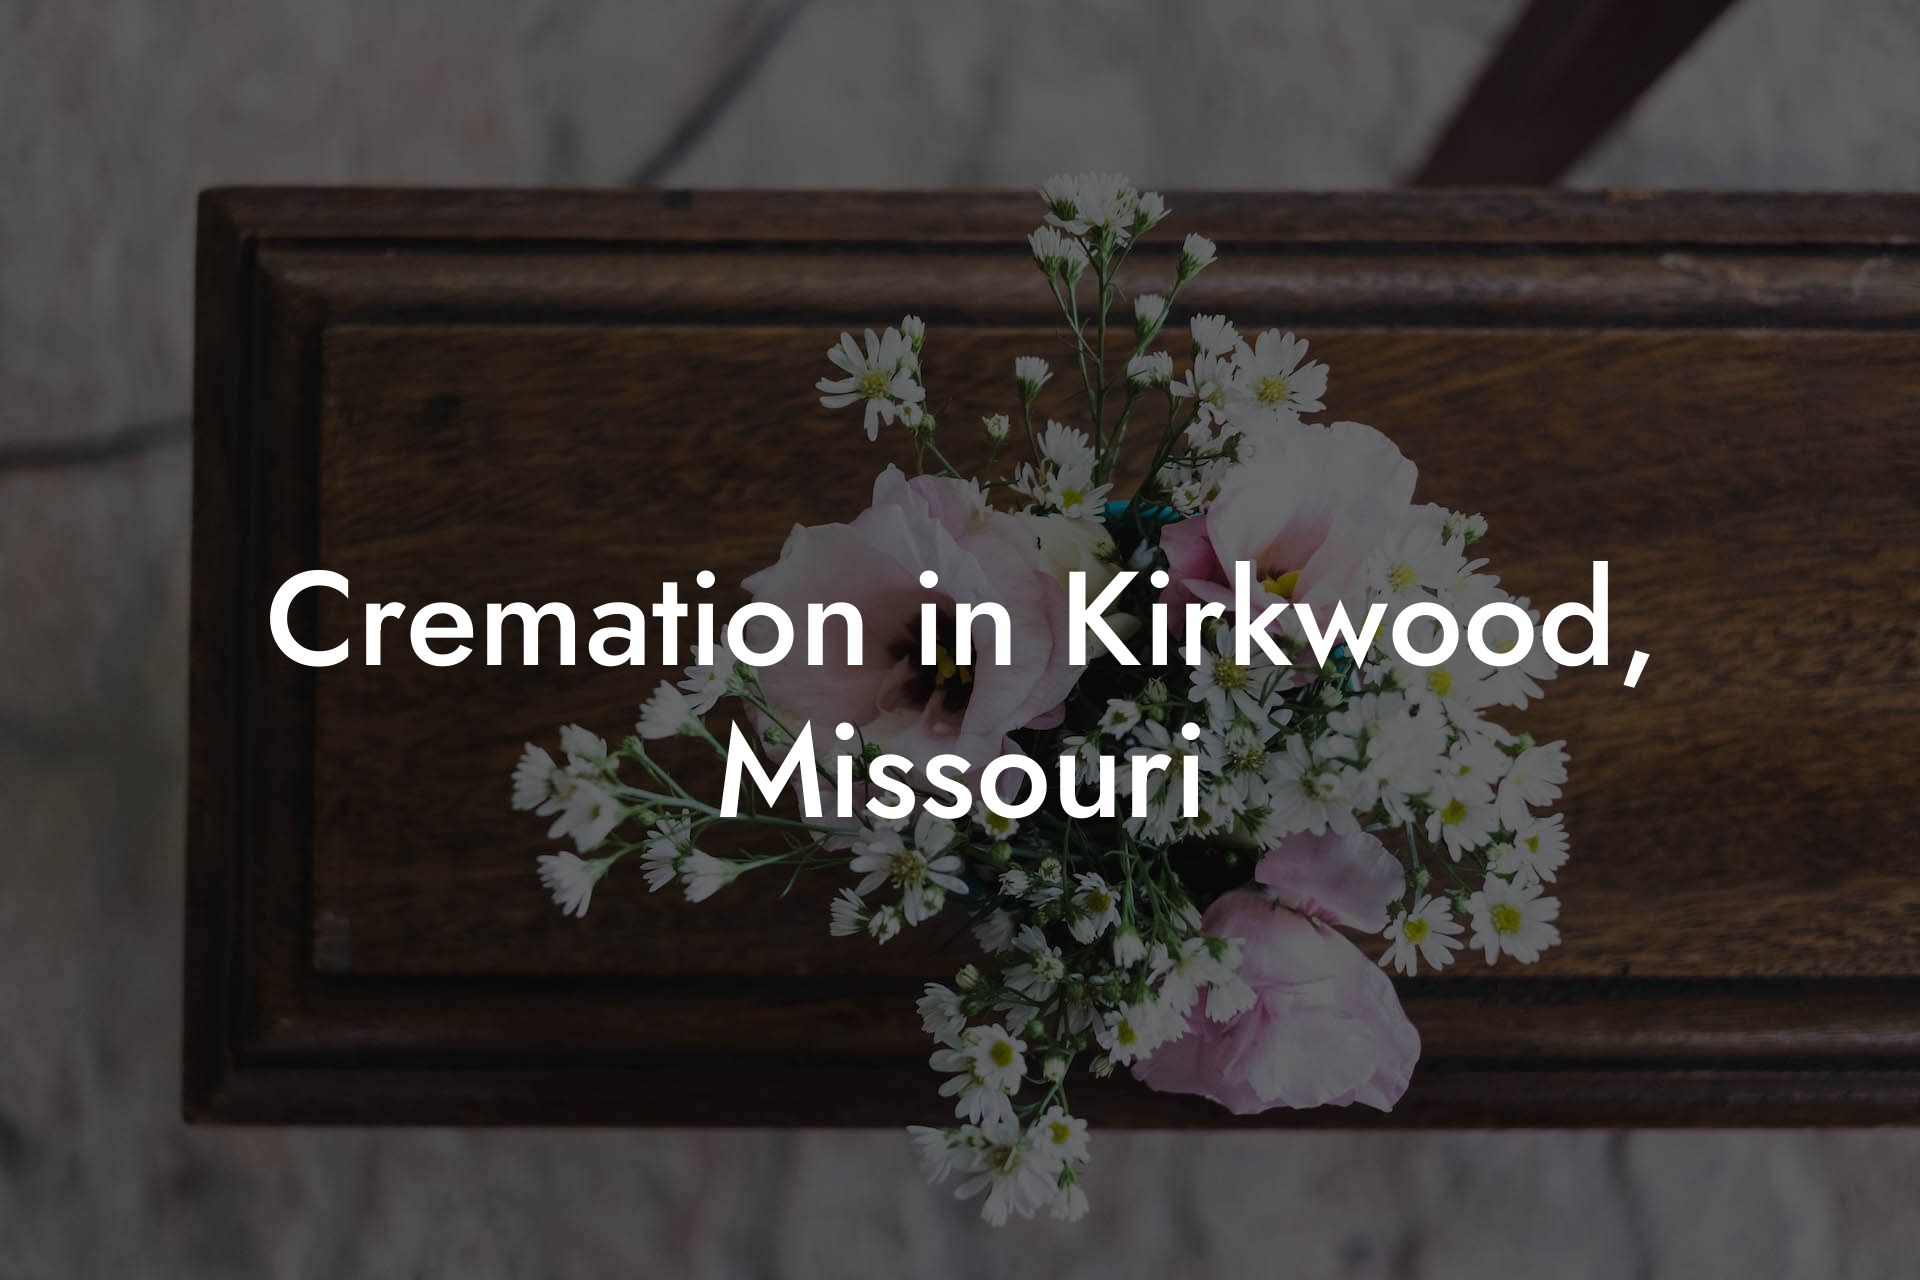 Cremation in Kirkwood, Missouri